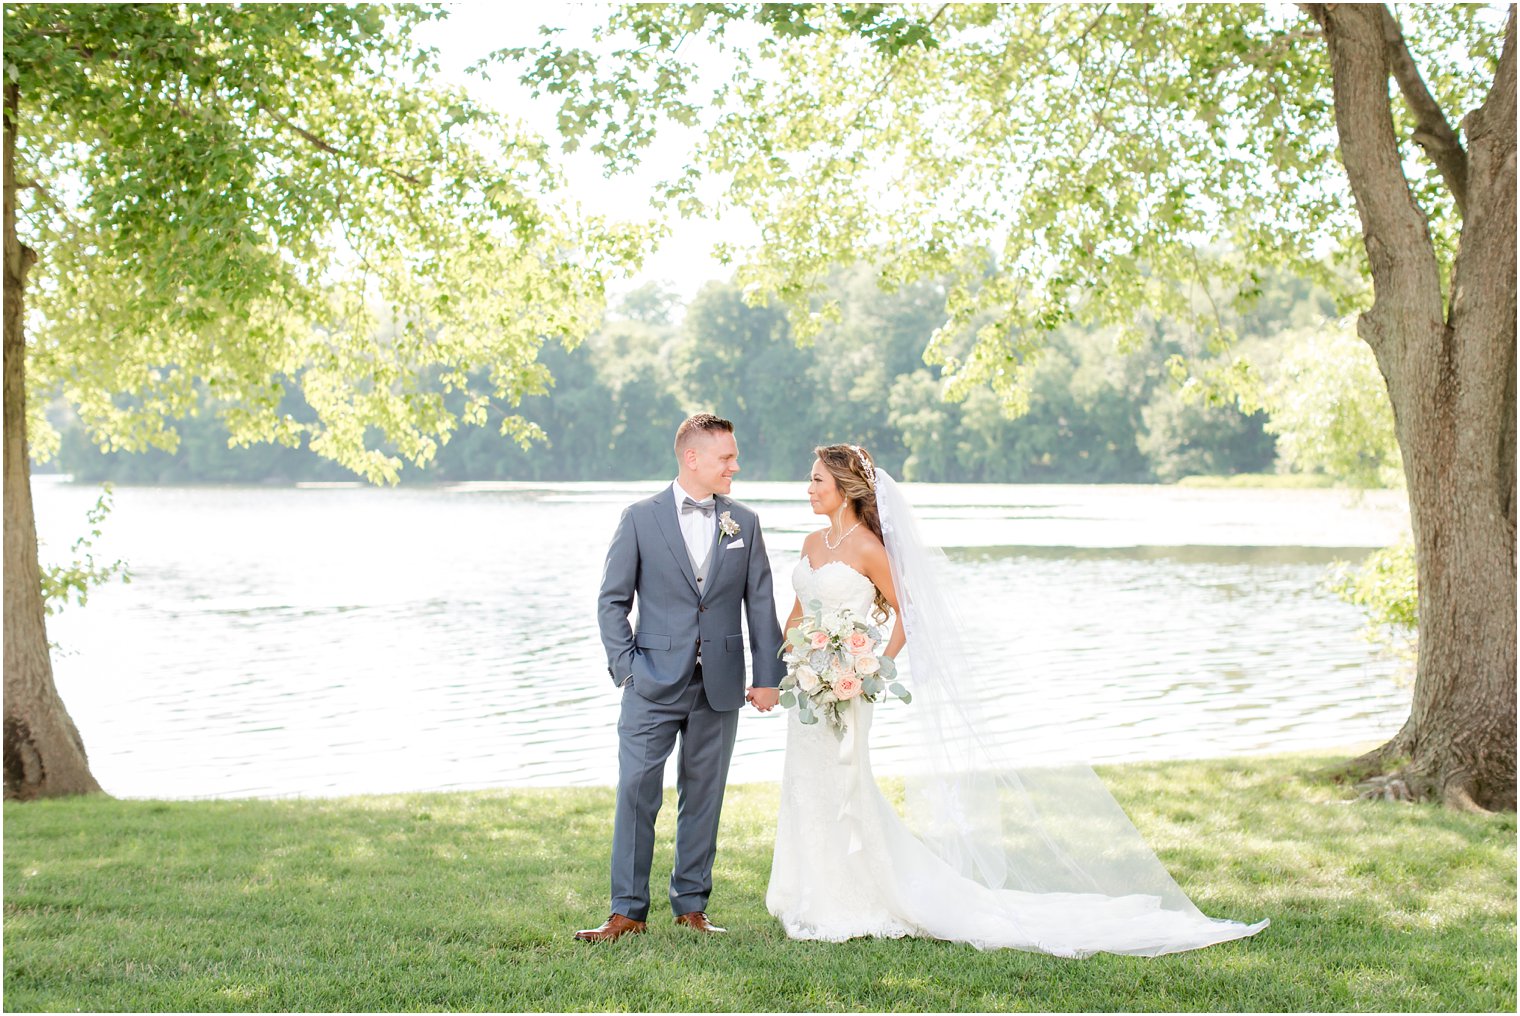 Franklin Lakes NJ Wedding | Idalia Photography